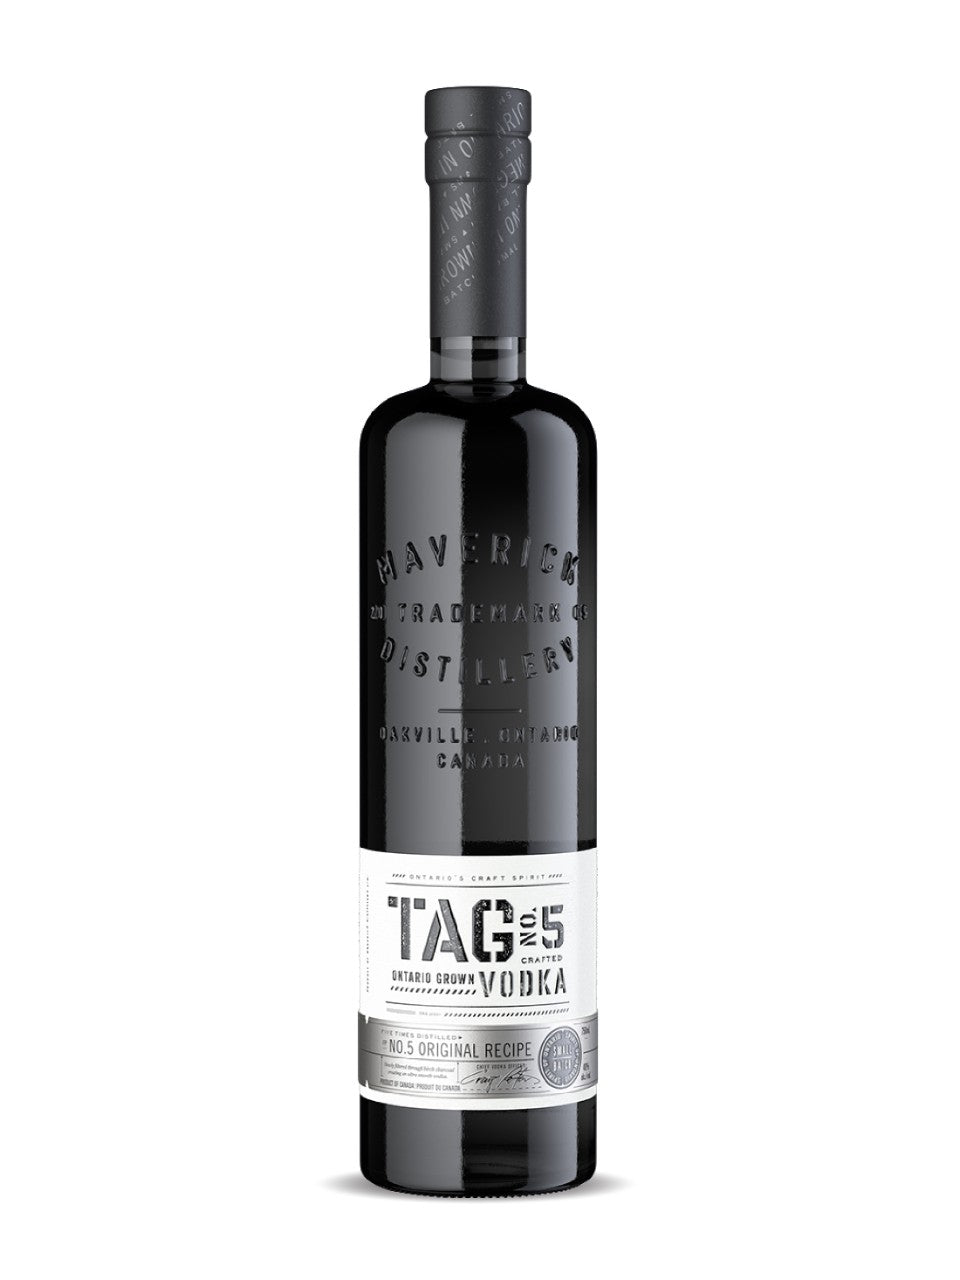 Tag No. 5 Vodka 750 mL bottle